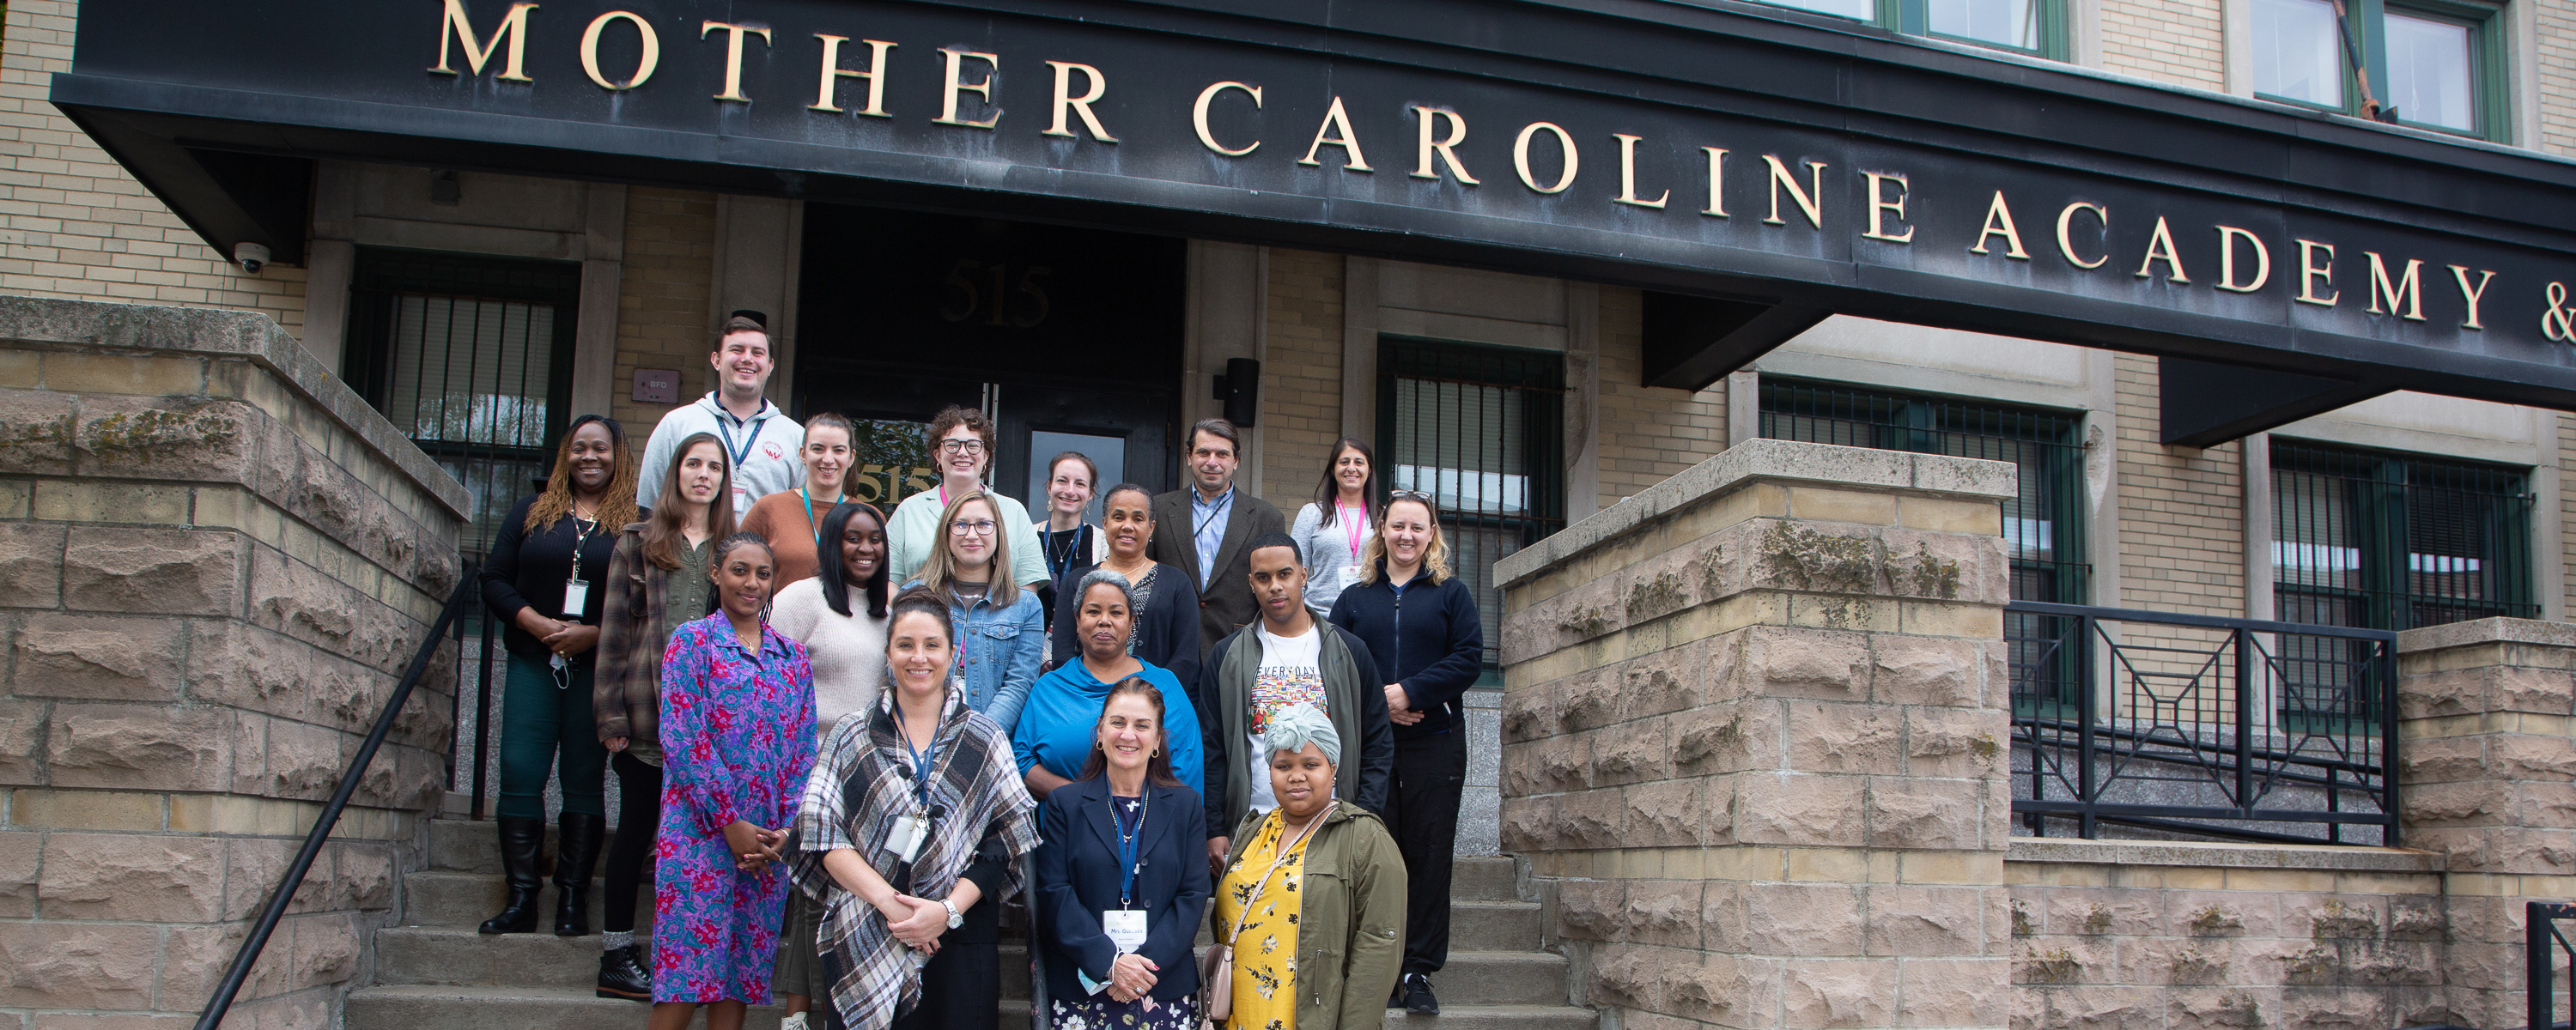 Mother Caroline Academy & Education Center Success Story